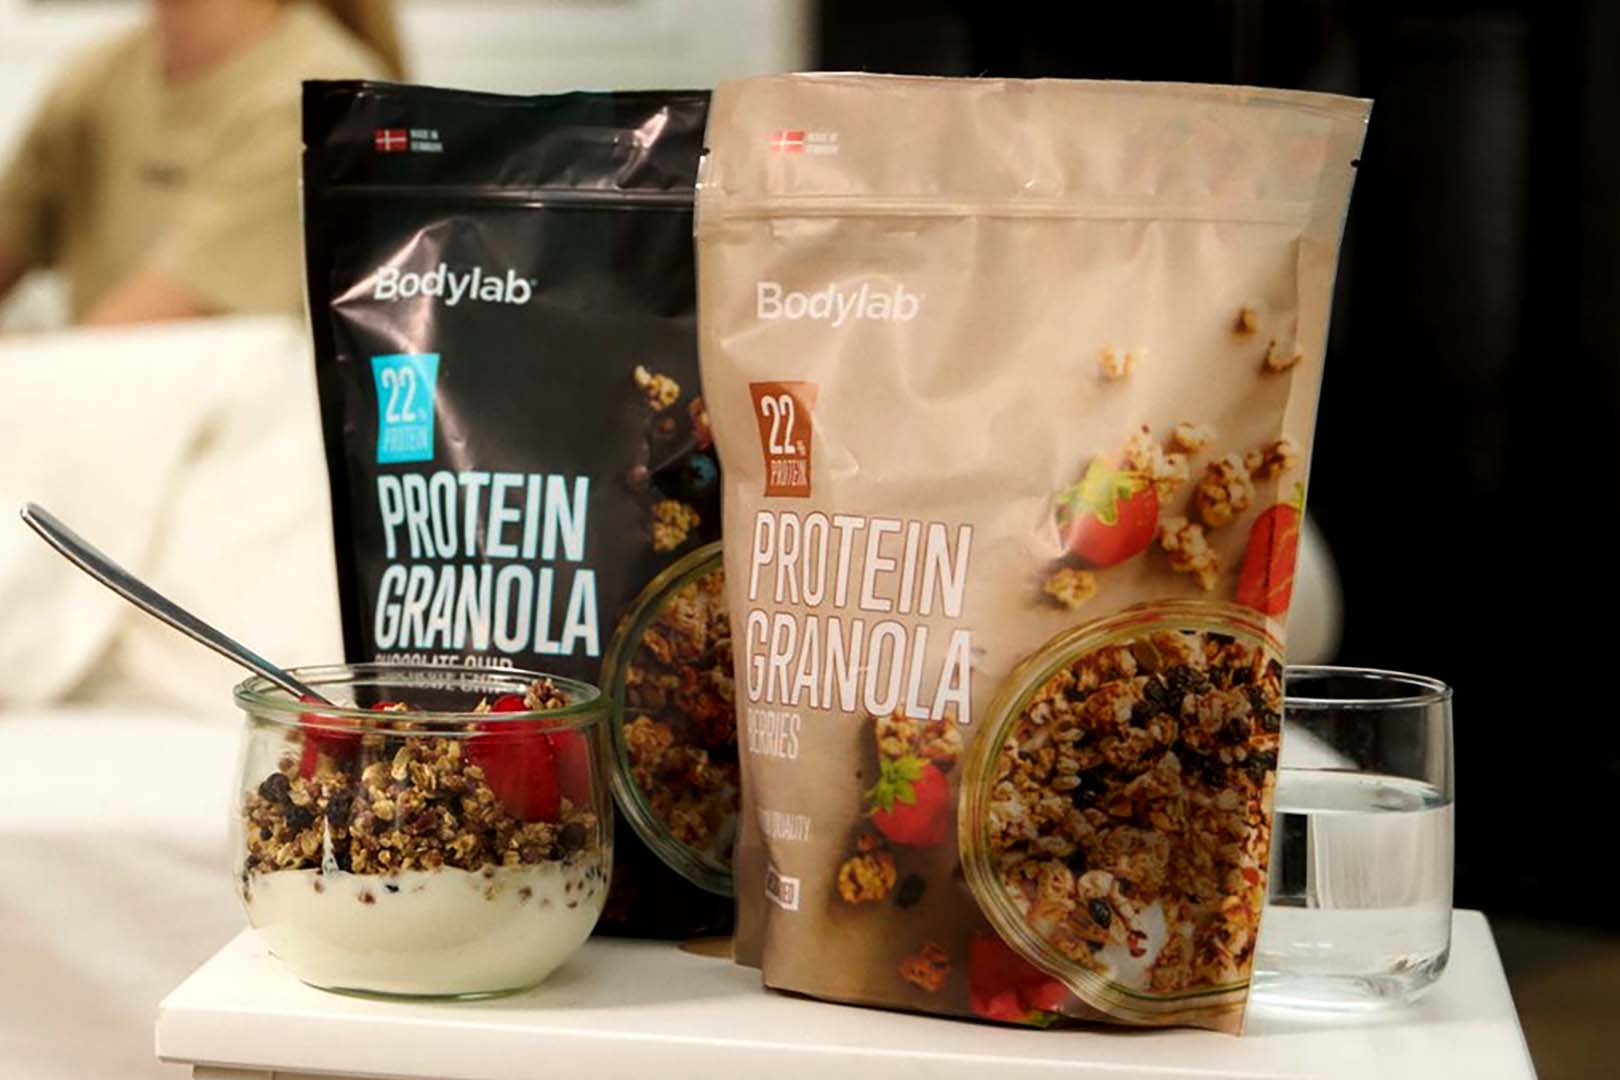 Bodylab Protein Granola